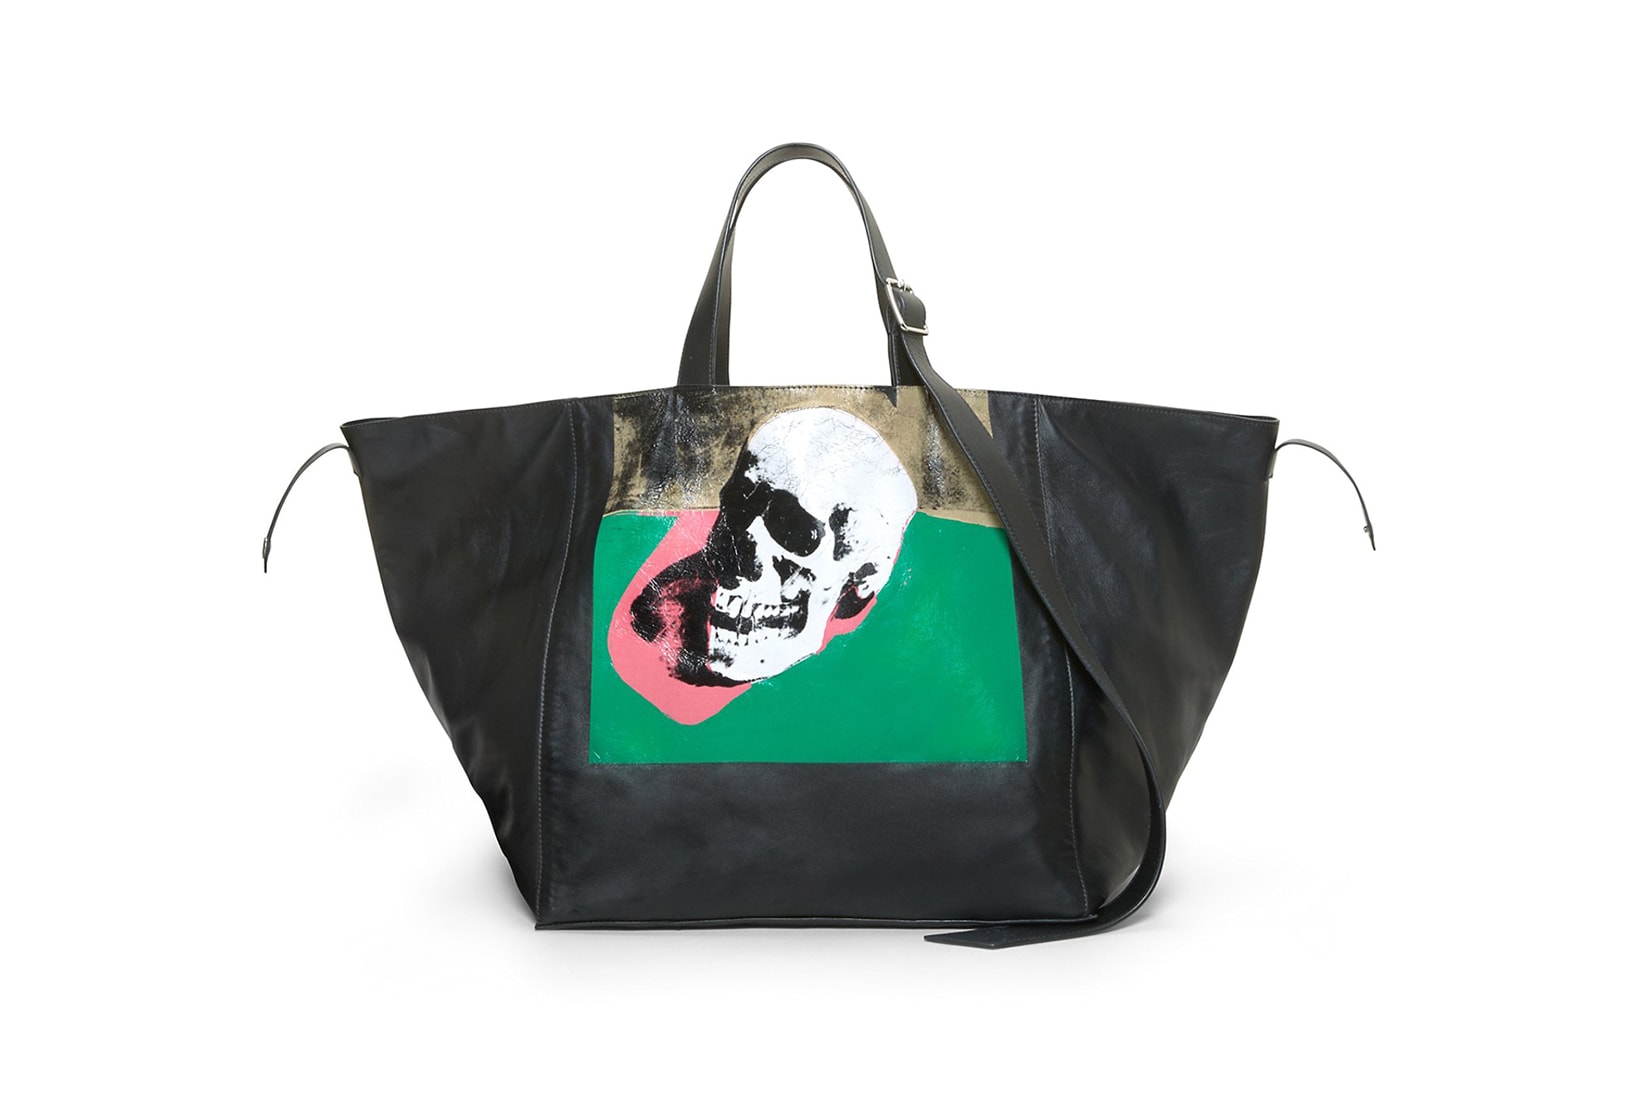 CALVIN KLEIN 205W39NYC Spring/Summer 2018 Handbag Collection Skull Tote Black Pink Green